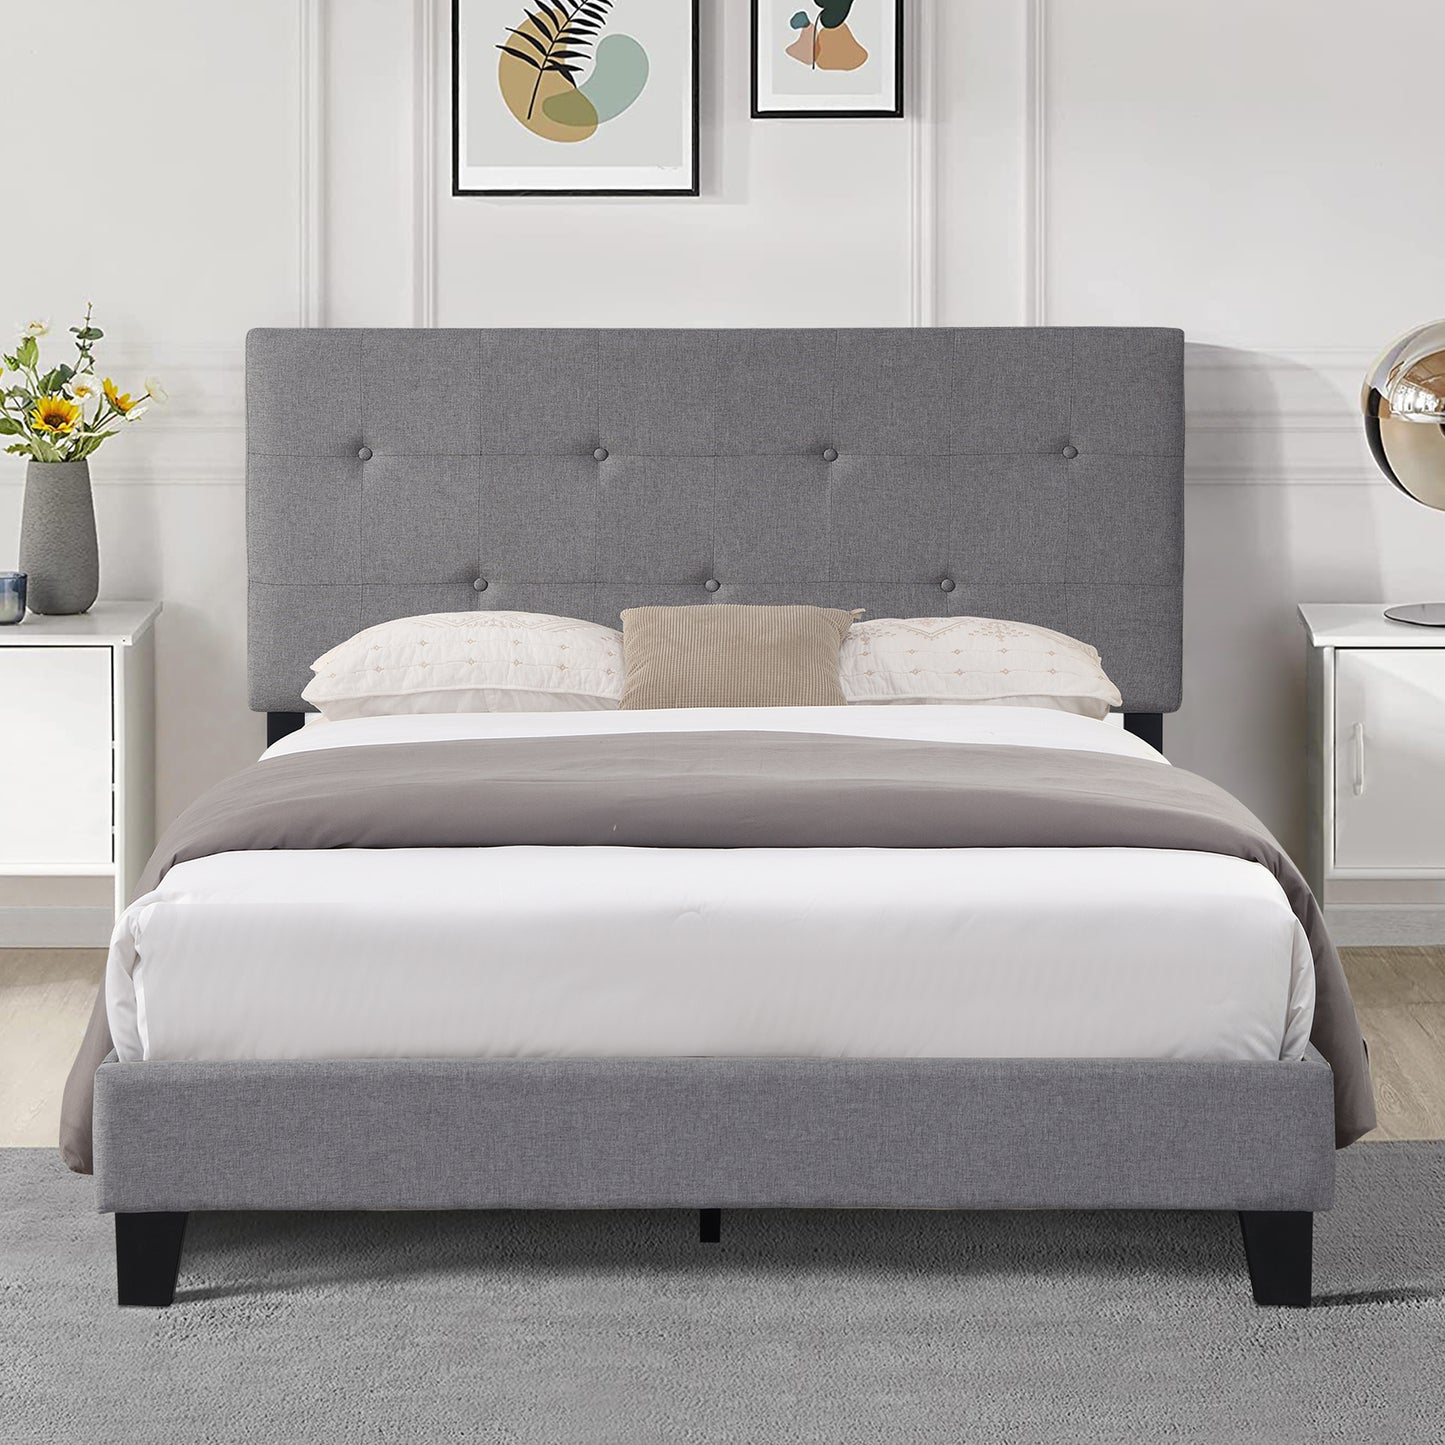 SYNGAR Gray Velvet Upholstered Platform Bed Frame Full Size with Elegant Headboard, Wood Frame Bedroom Furniture with Strong Slat Support, No Box Spring Needed, Noise Free, Easy Assembly